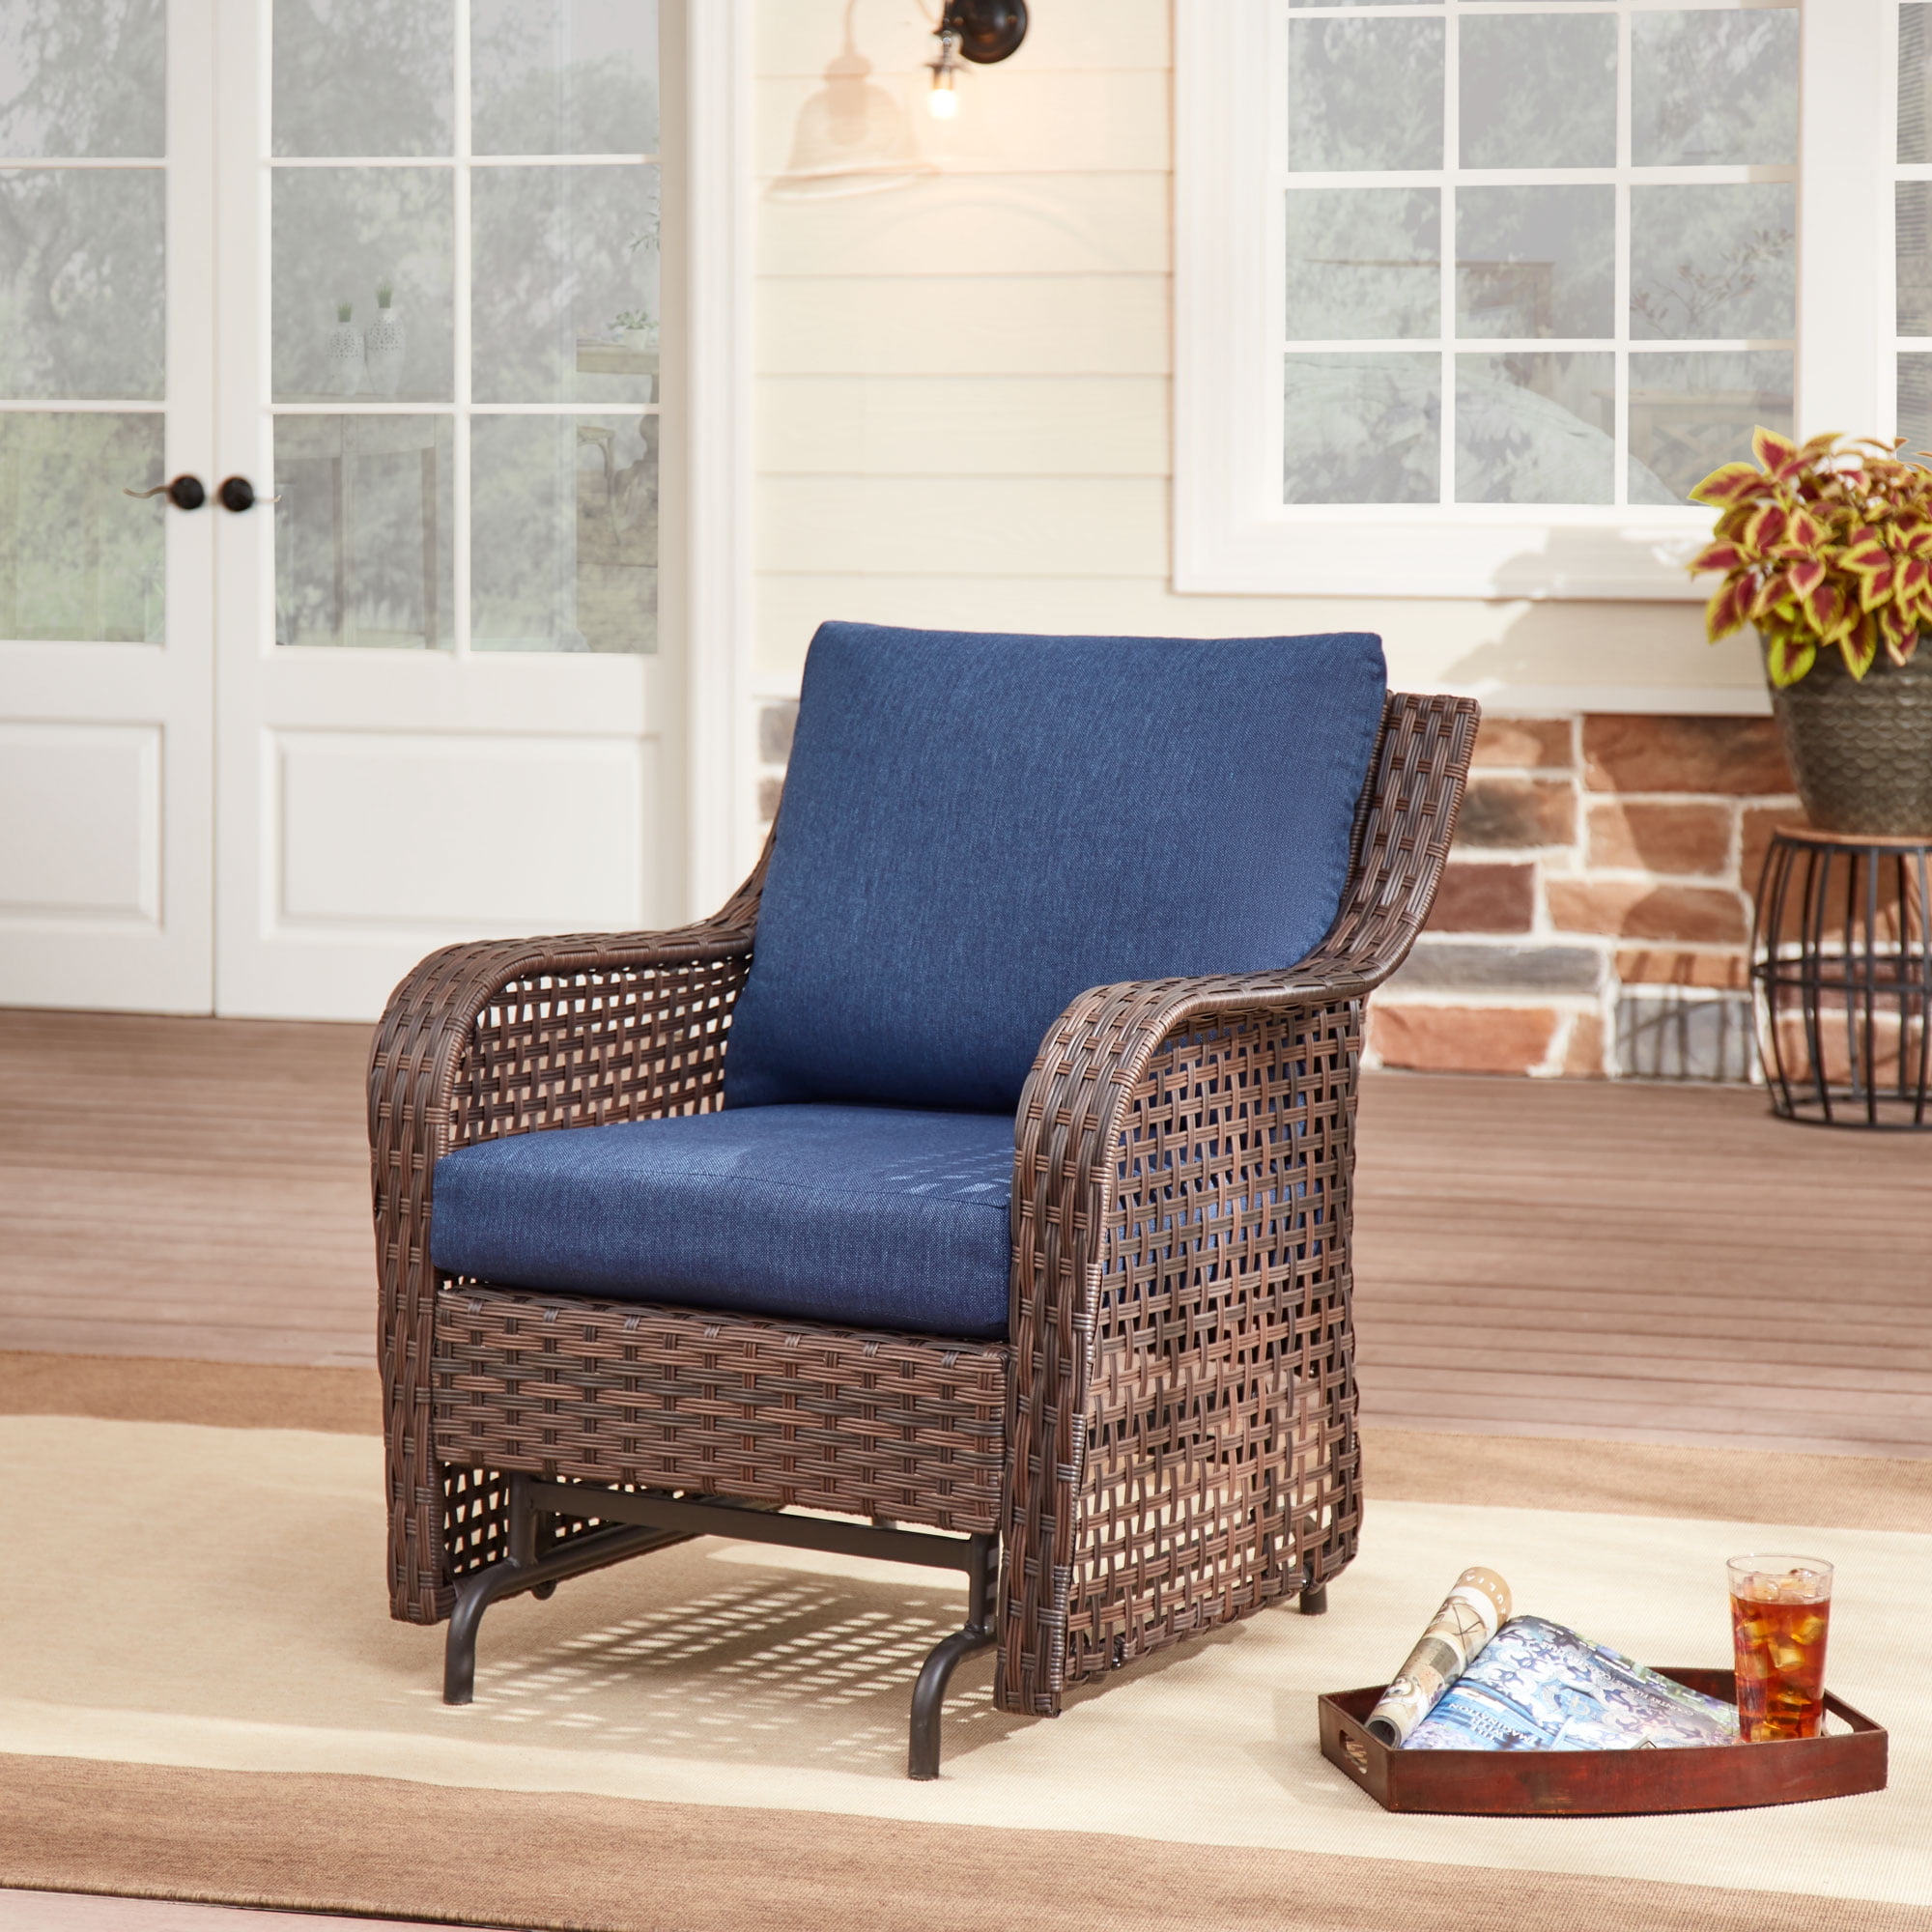 Mainstays Tuscany Ridge Outdoor Glider Chair, Blue - Walmart.com